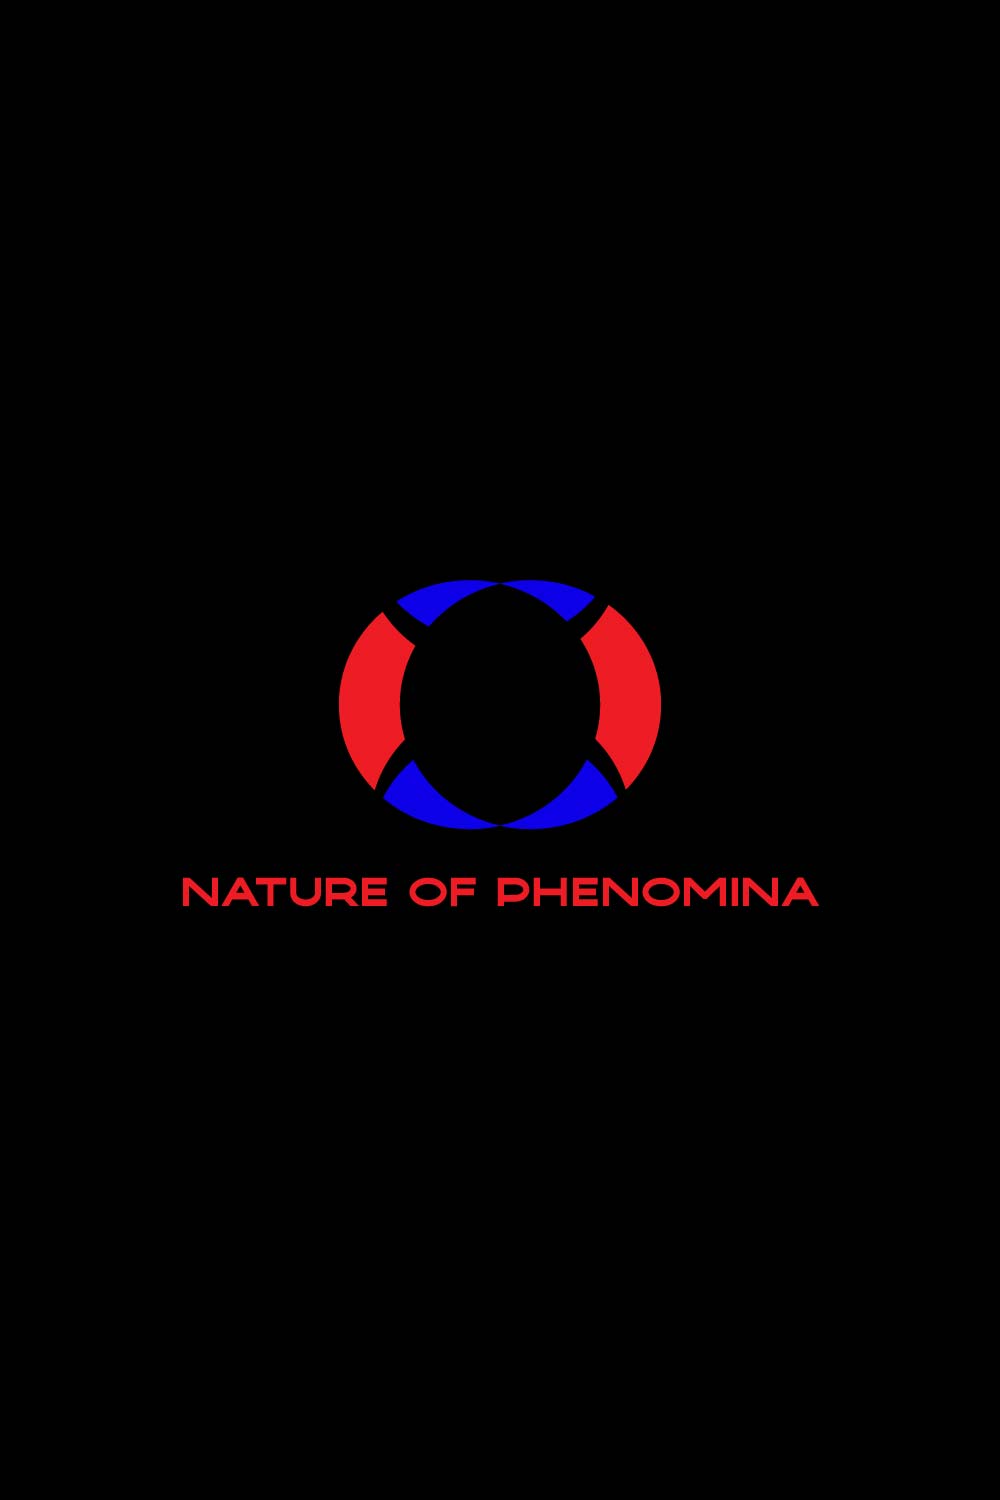 NATURE OF PHENOMENA pinterest preview image.